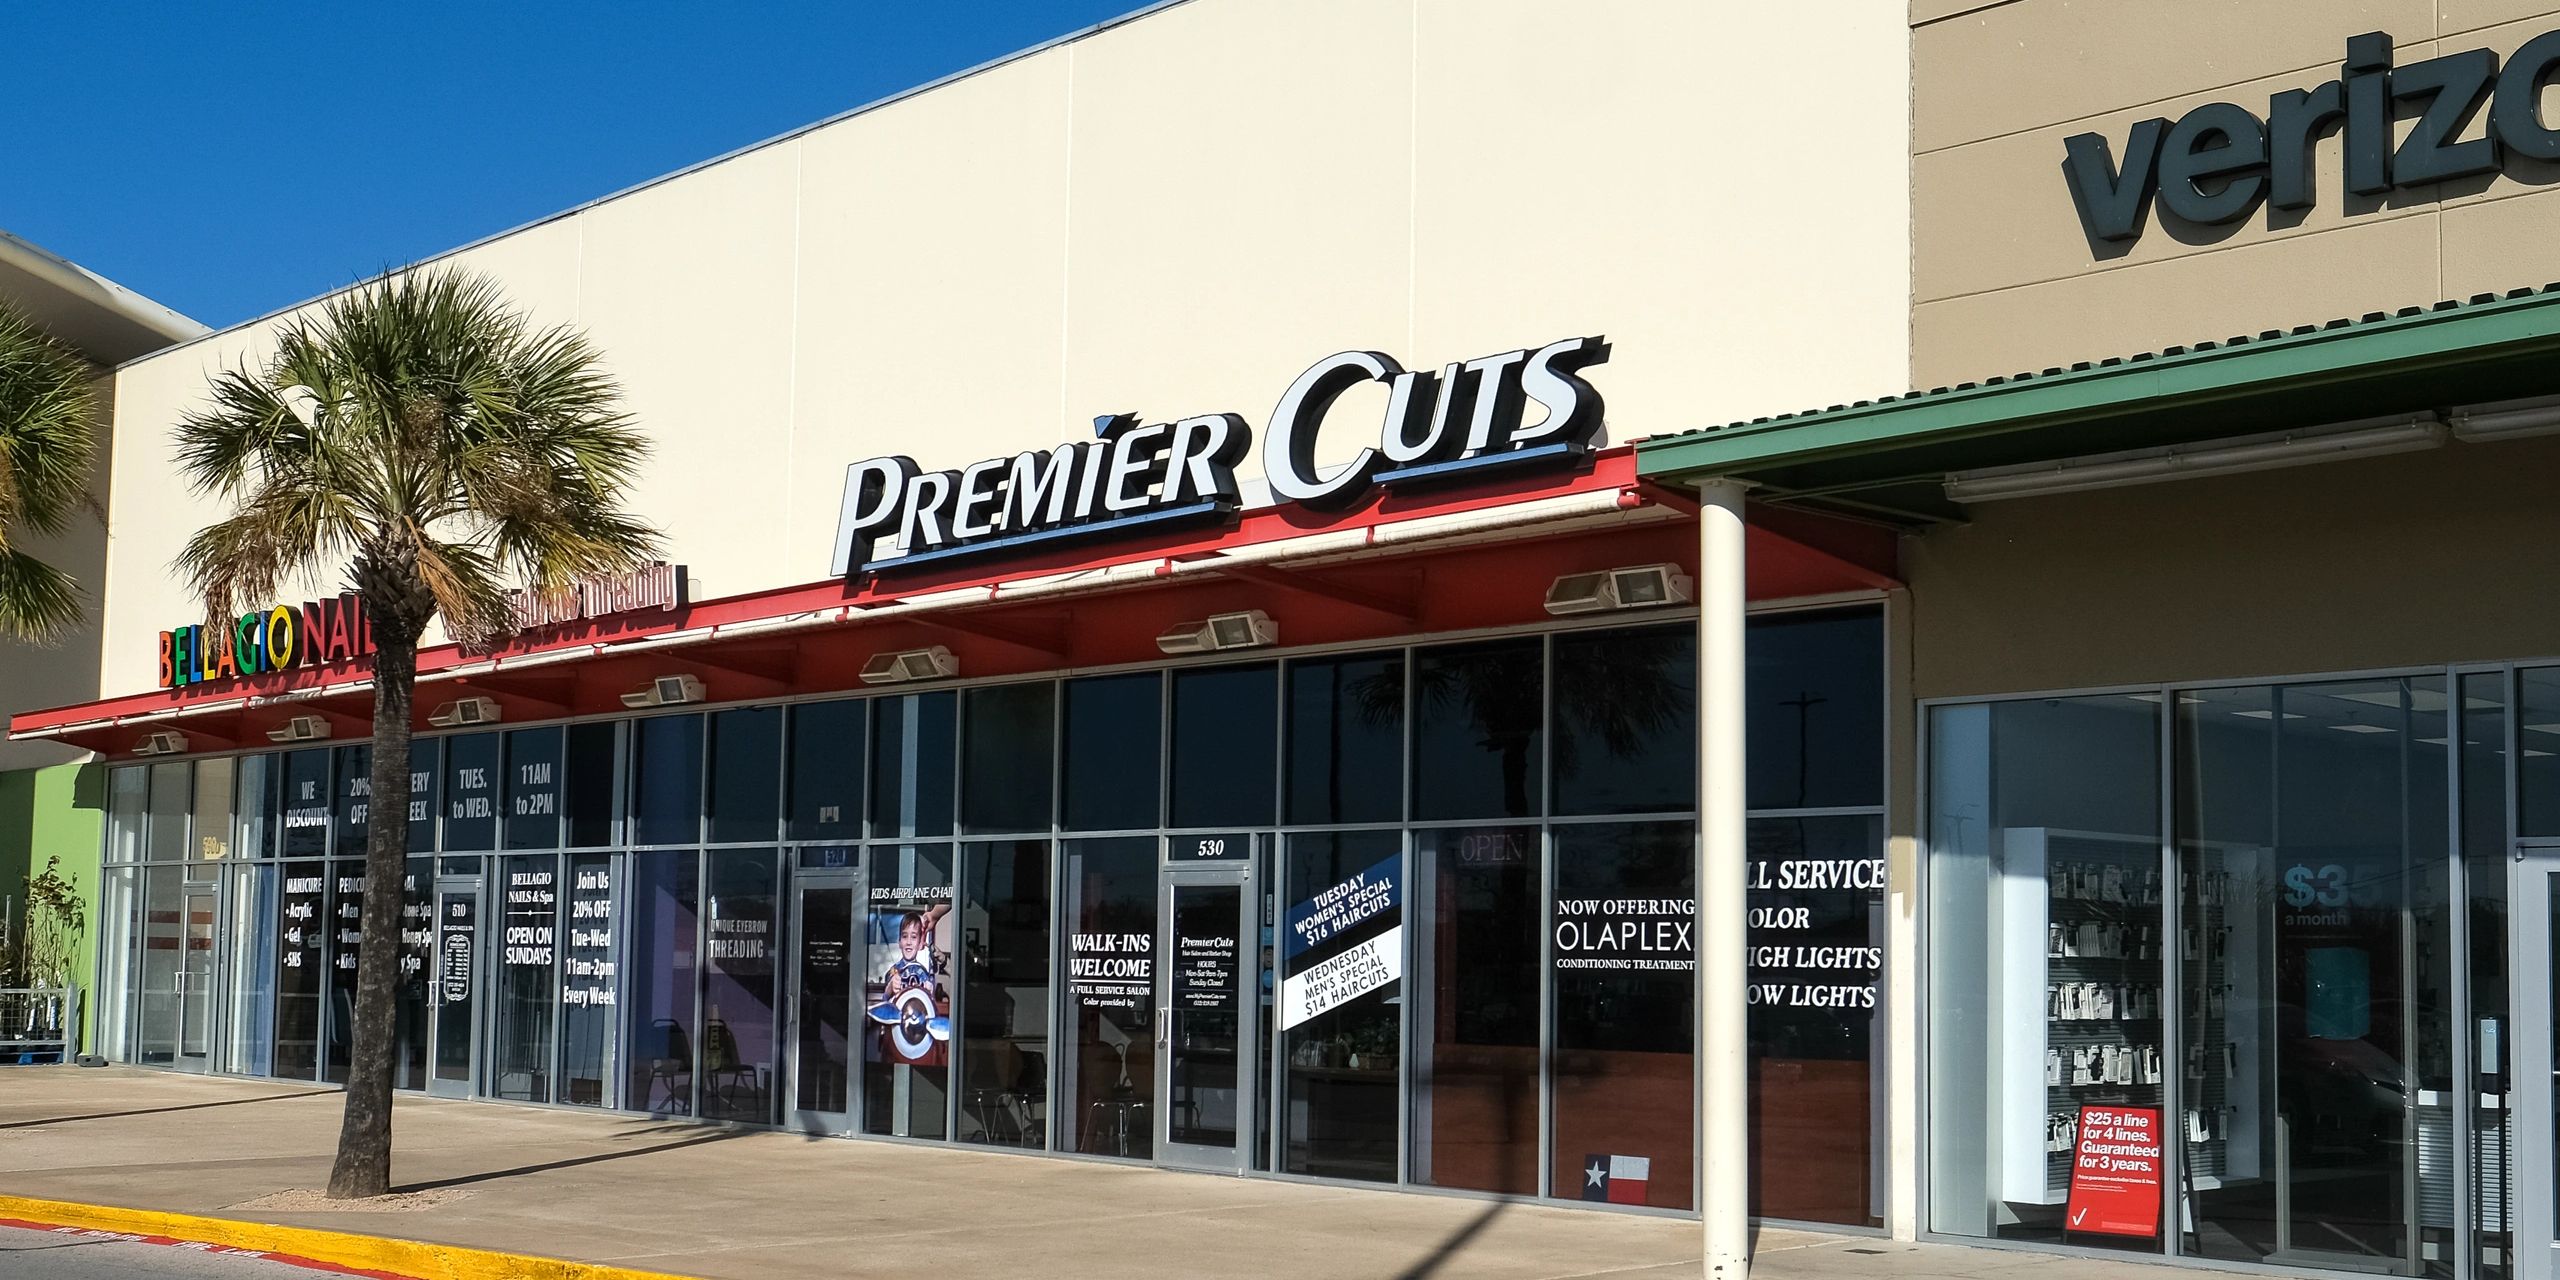 Premier Cuts Round Rock